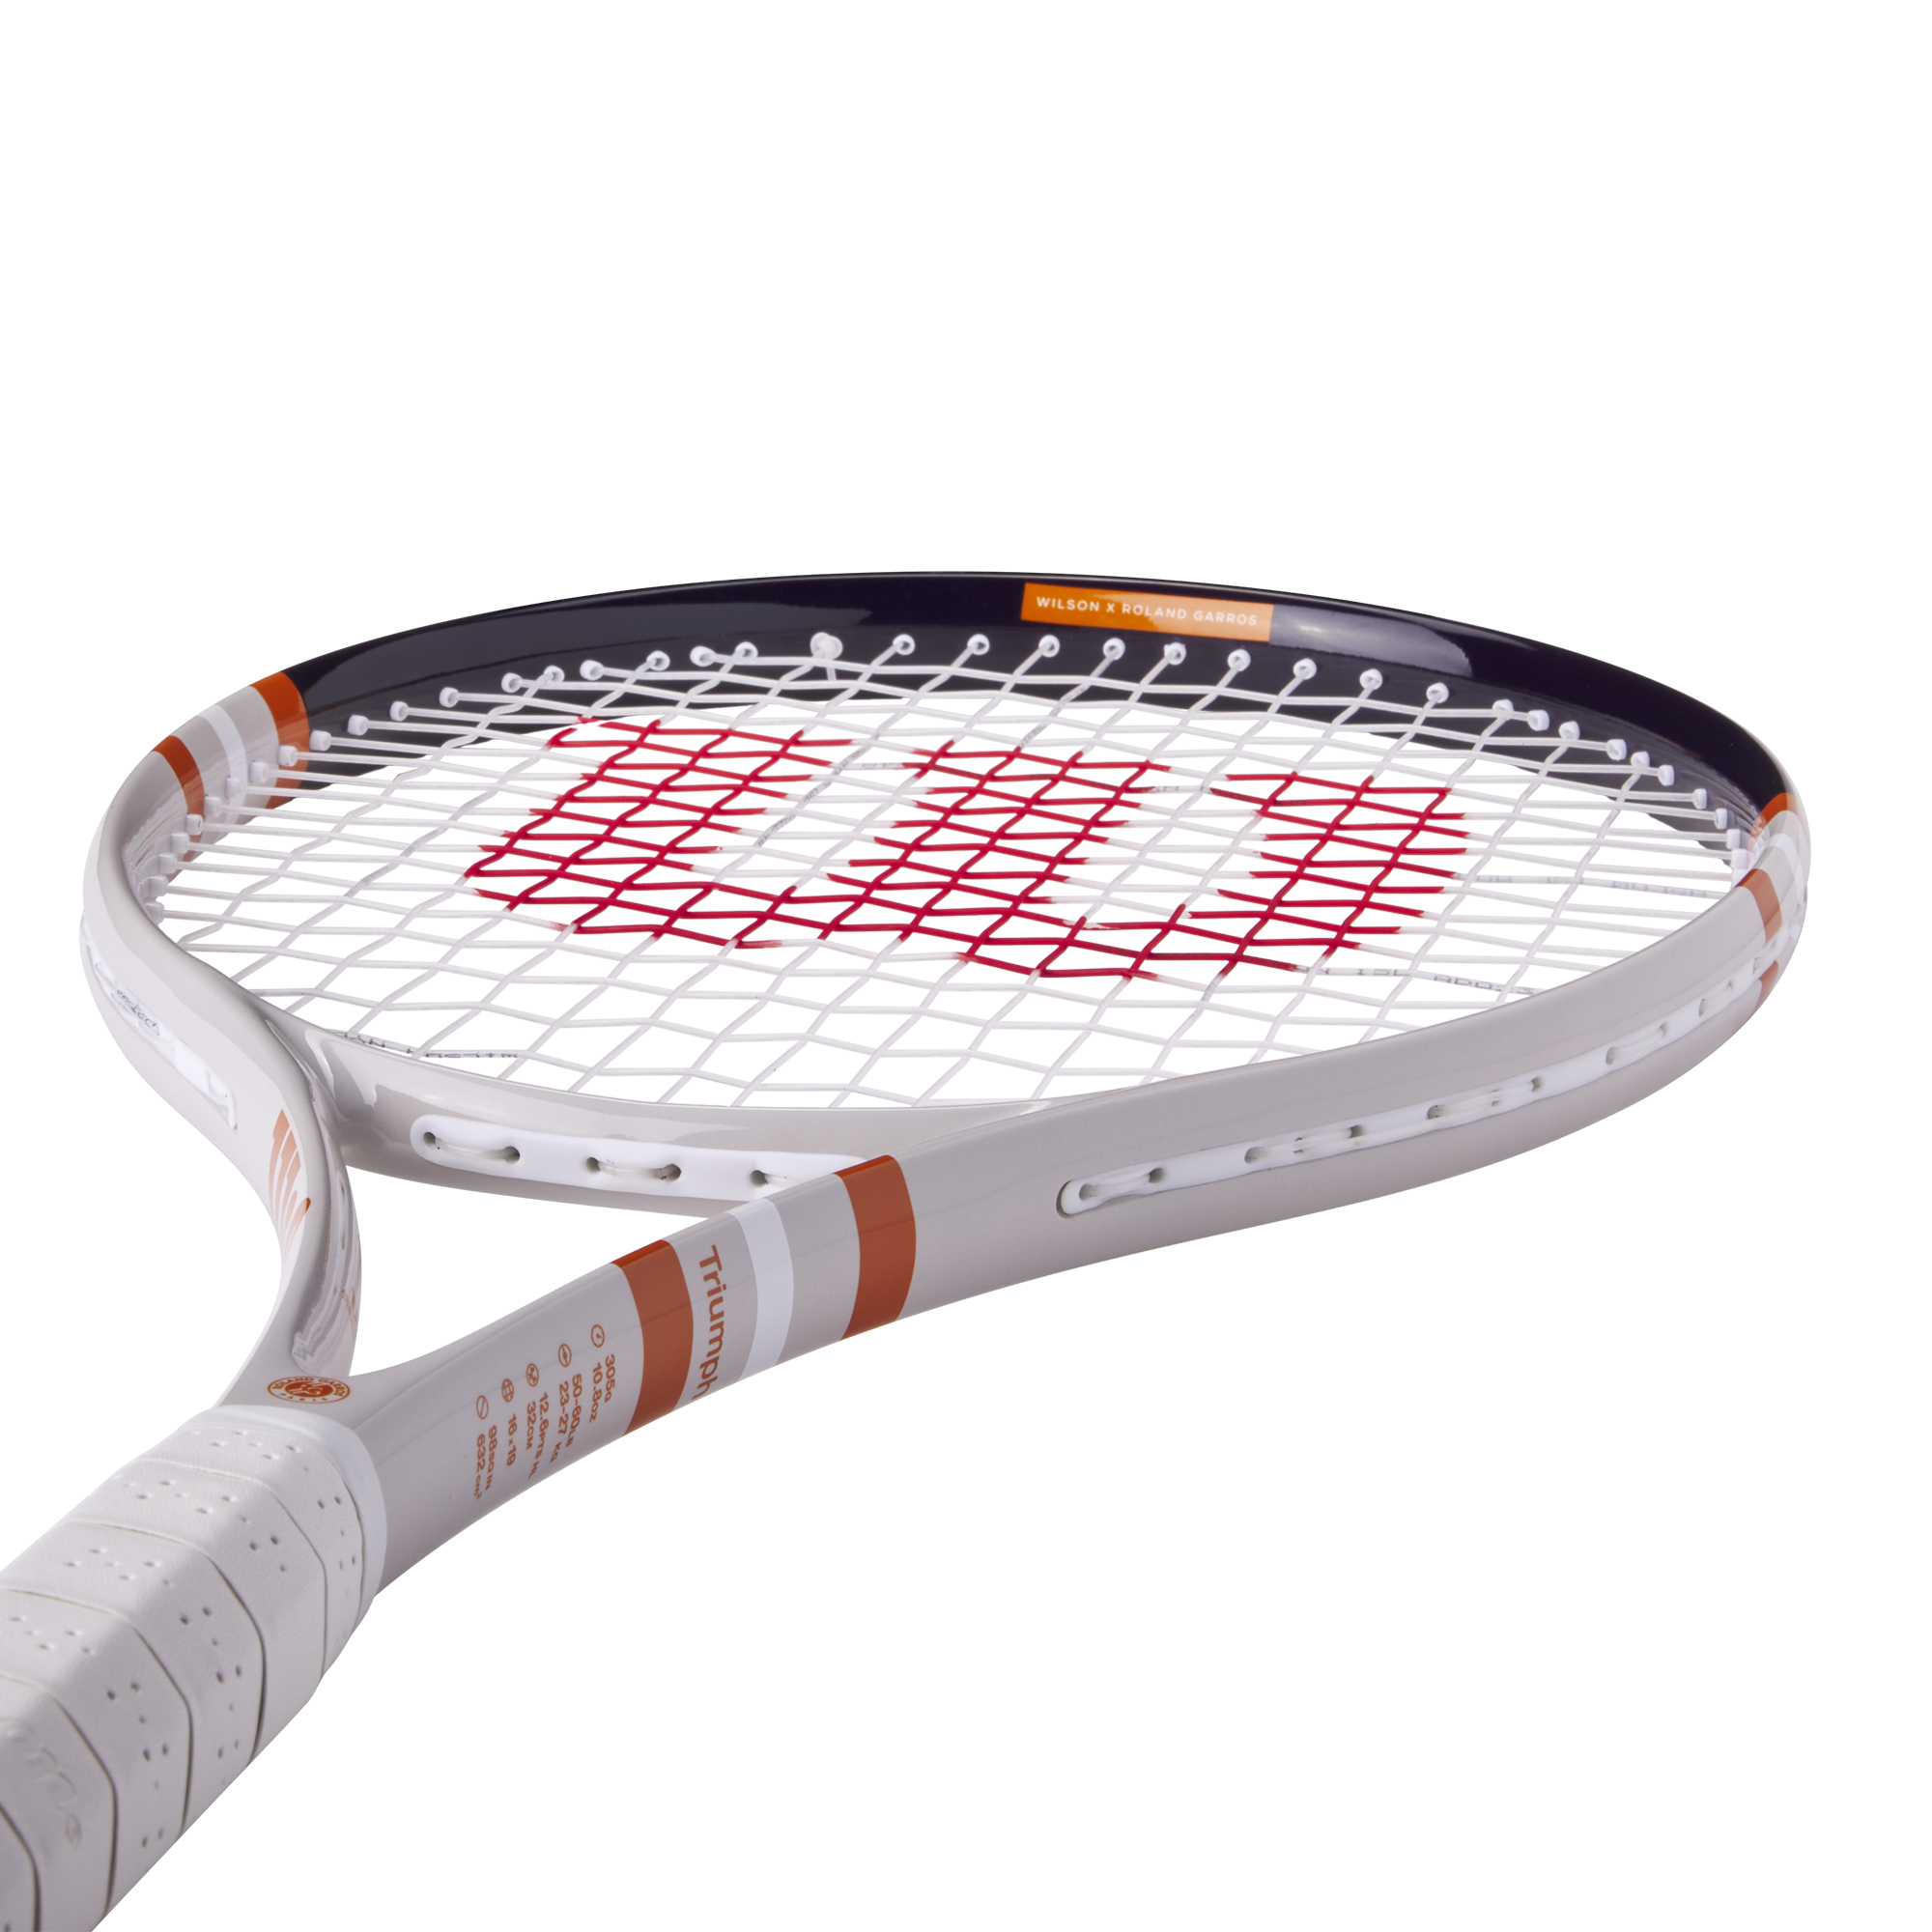 Wilson Roland-Garros Triumph Recreational Tennis Racket